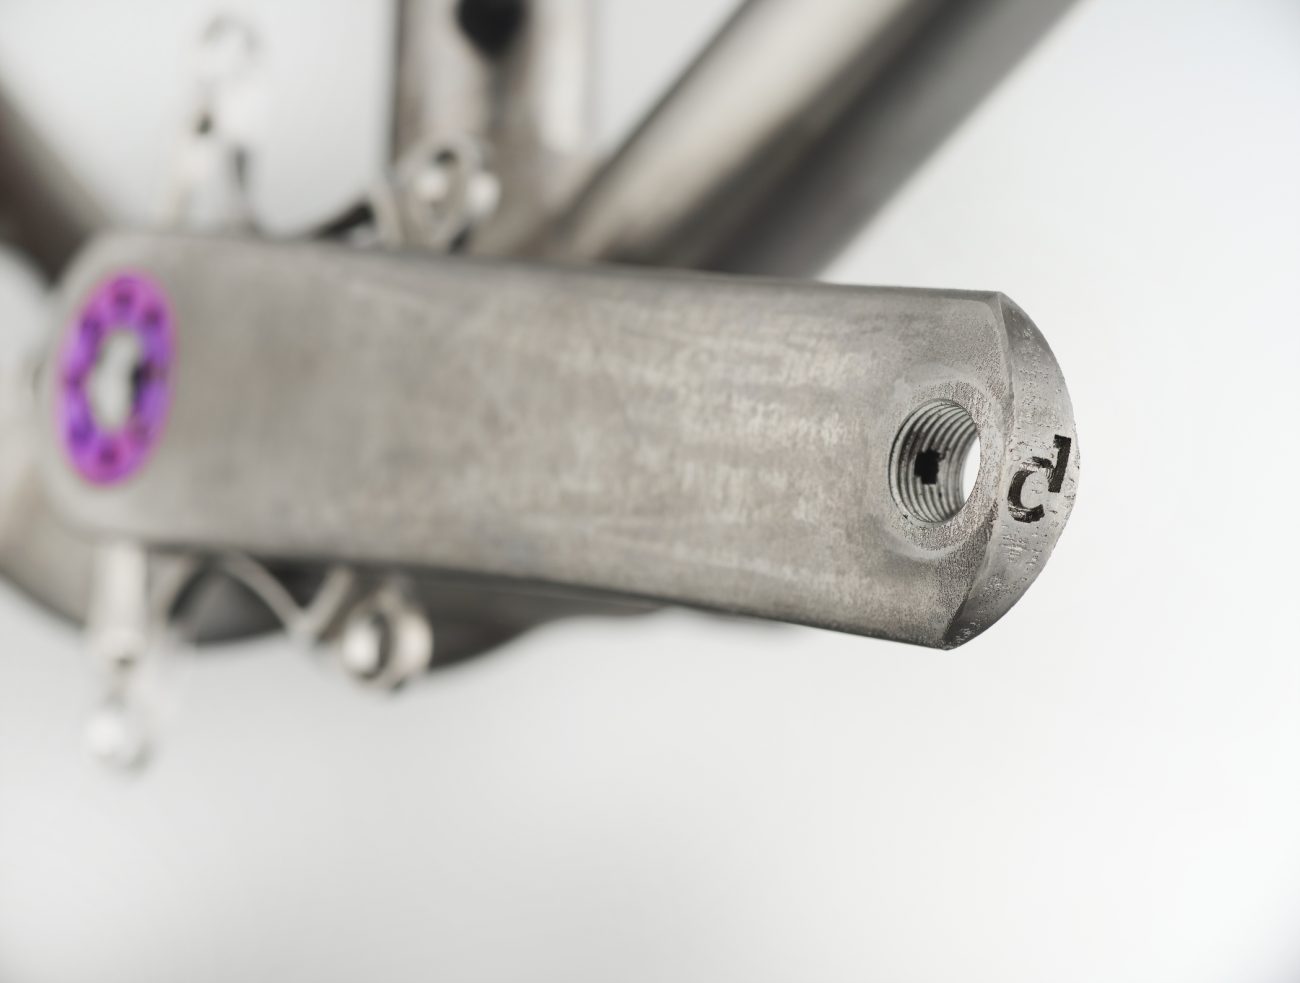 Sturdy Cycles titanium 3D printed bike frame photographed by Adam Gasson / adamgasson.com